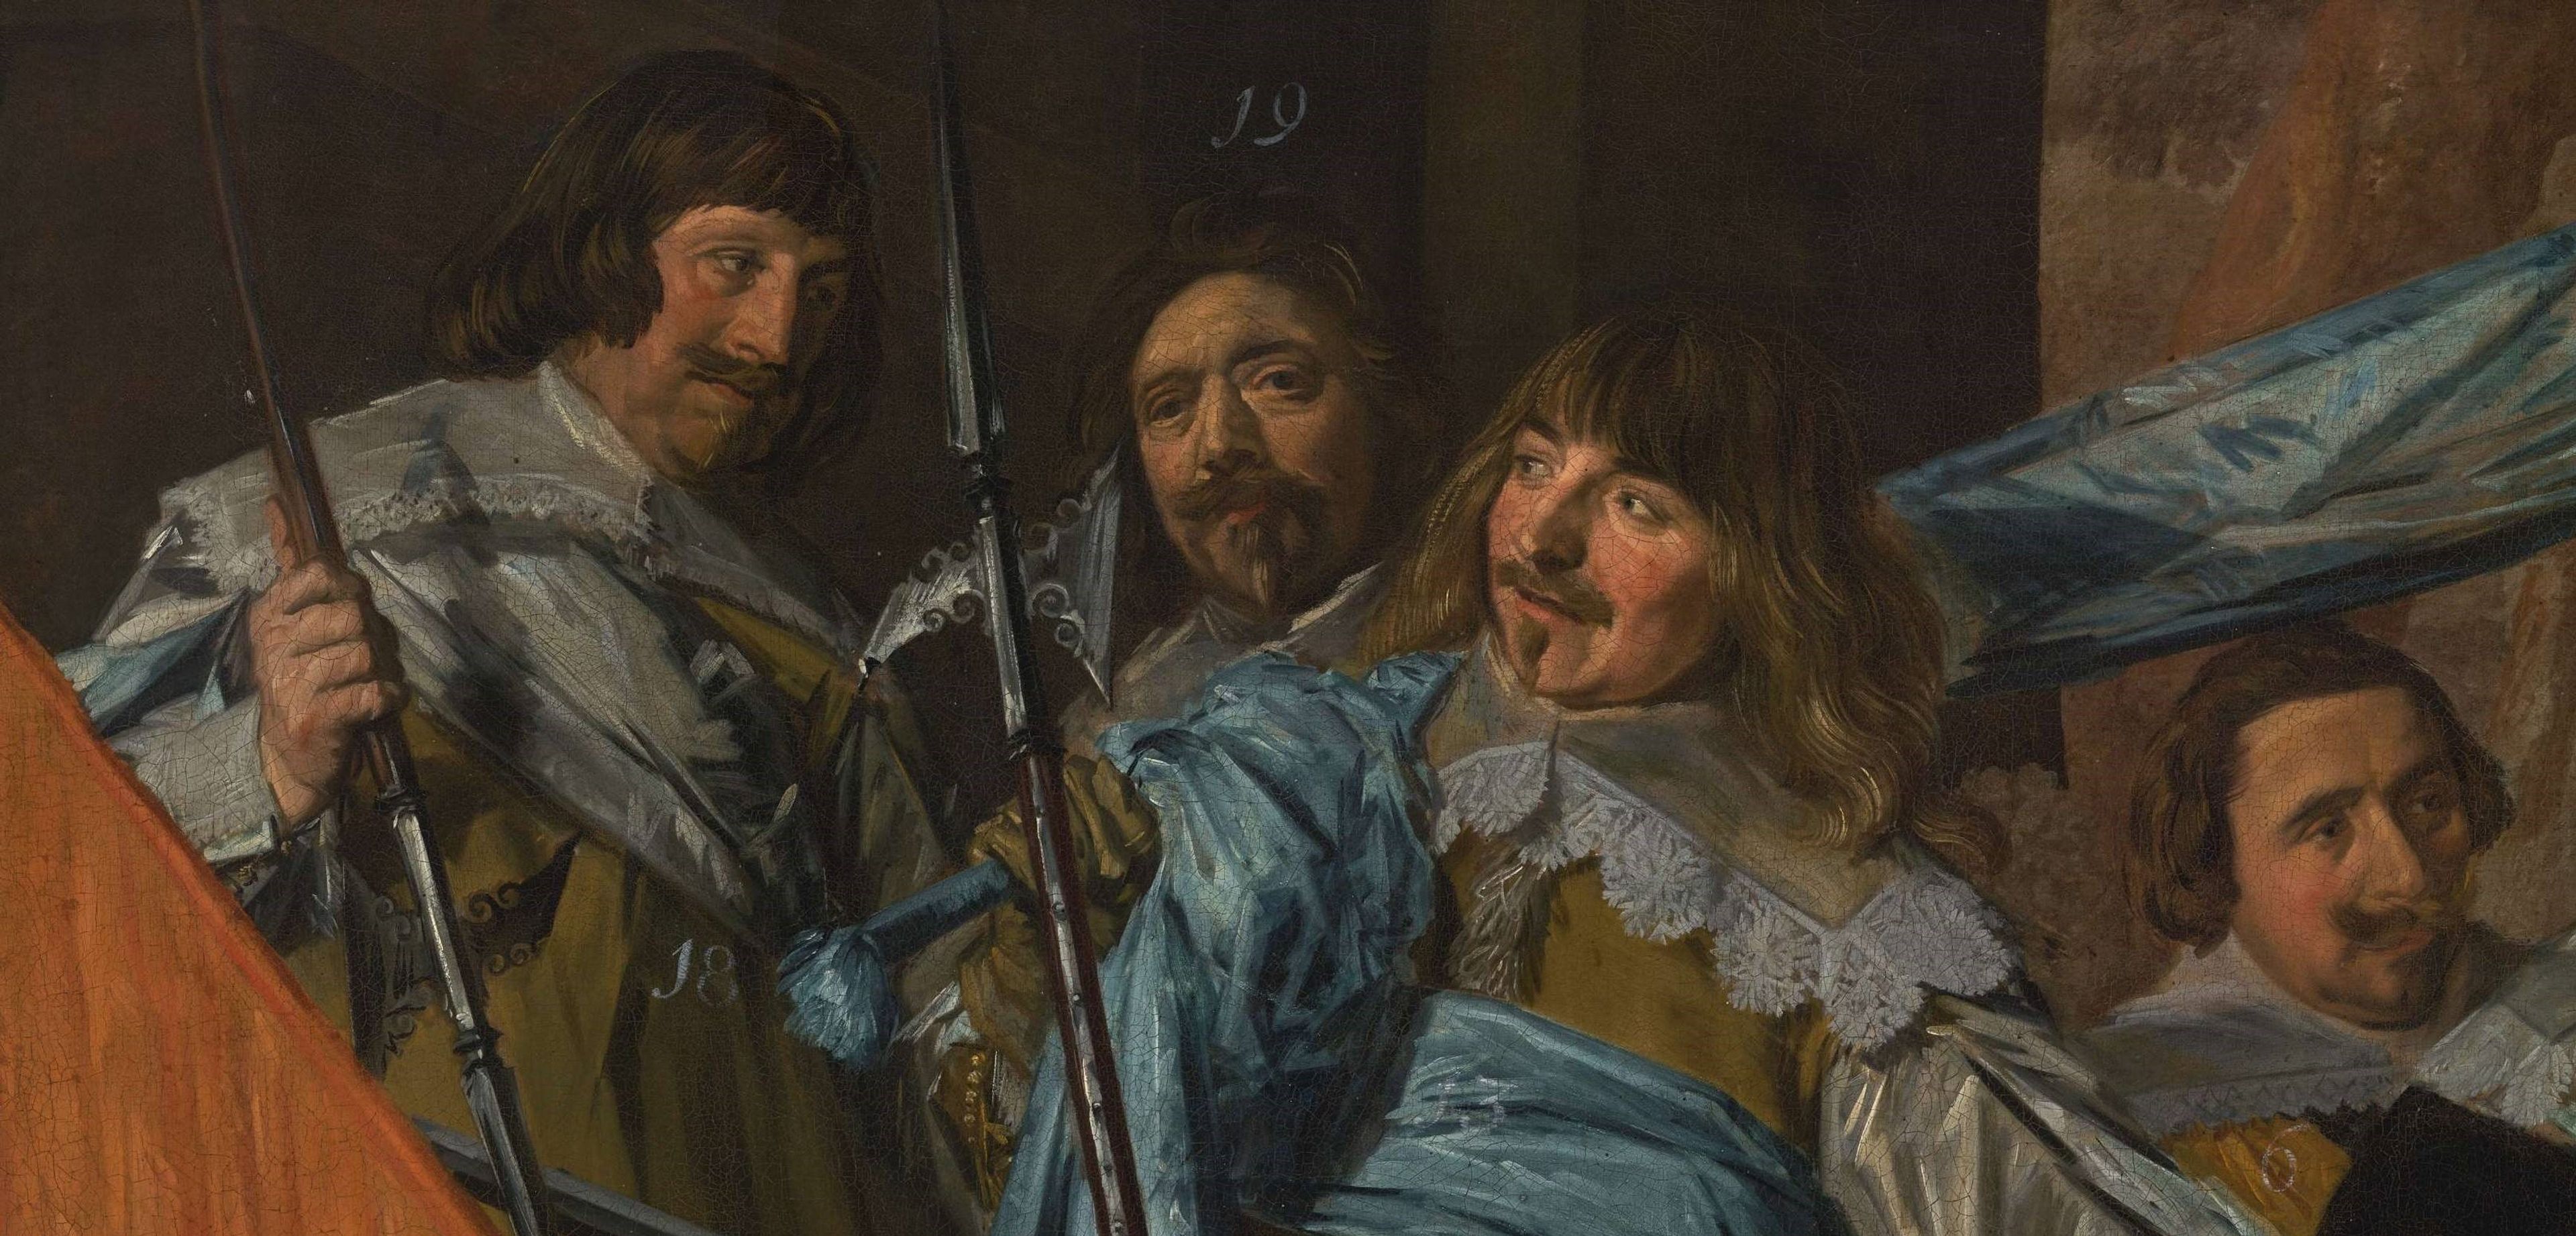 Frans Hals selfie: Frans Hals, ‘The Officers of the St George Militia Company’ (1639), Frans Hals Museum, Haarlem.